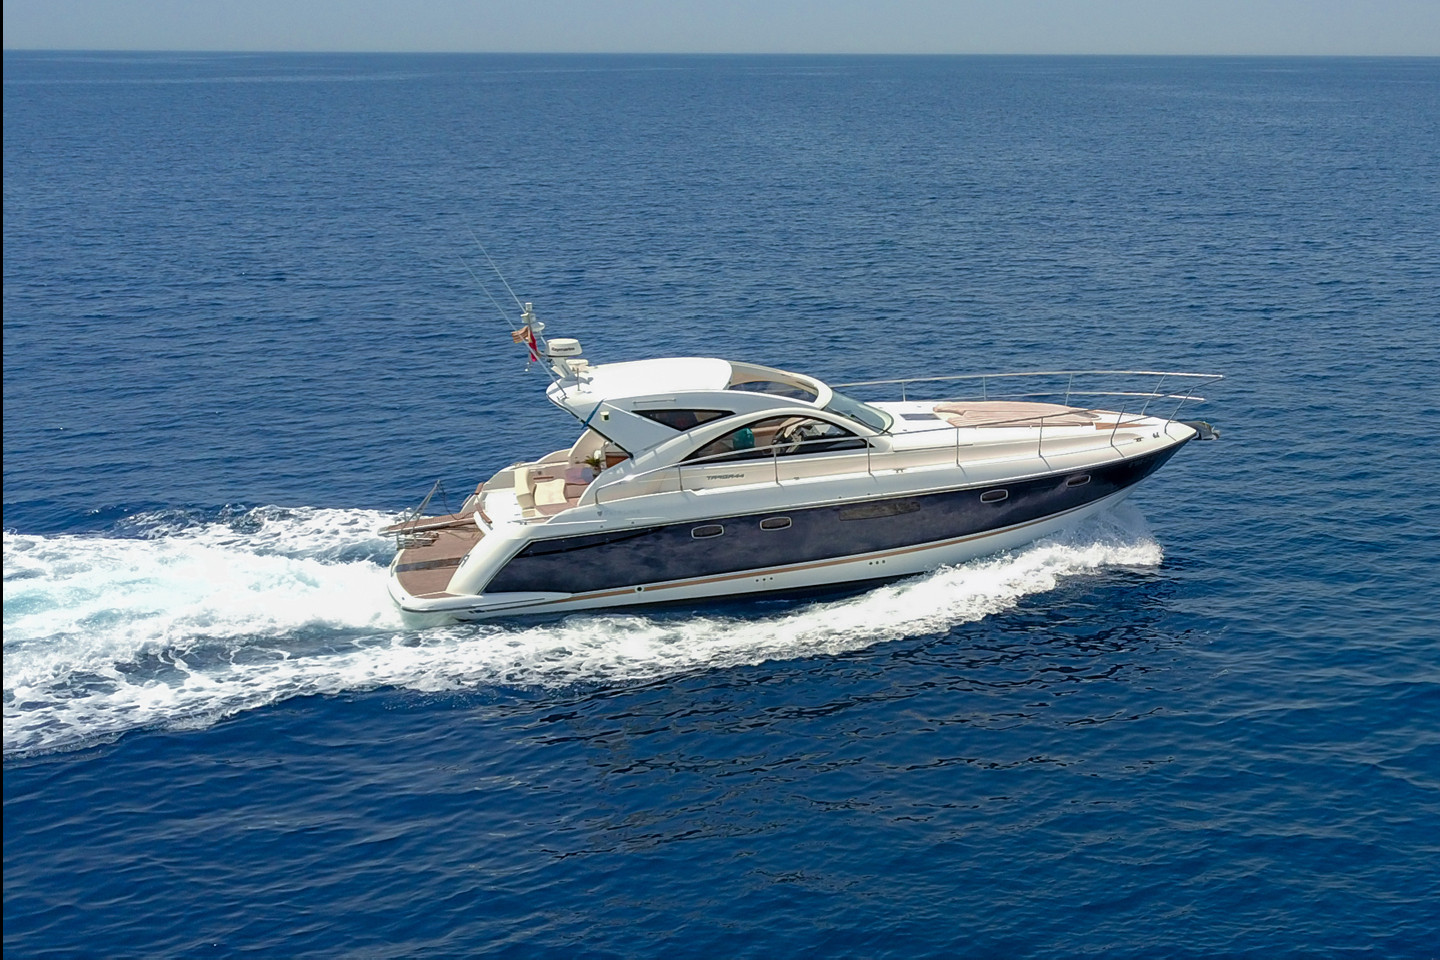 Power boat FOR CHARTER, year 2010 brand Fairline and model Targa 44, available in Marina Vela Barcelona Barcelona España